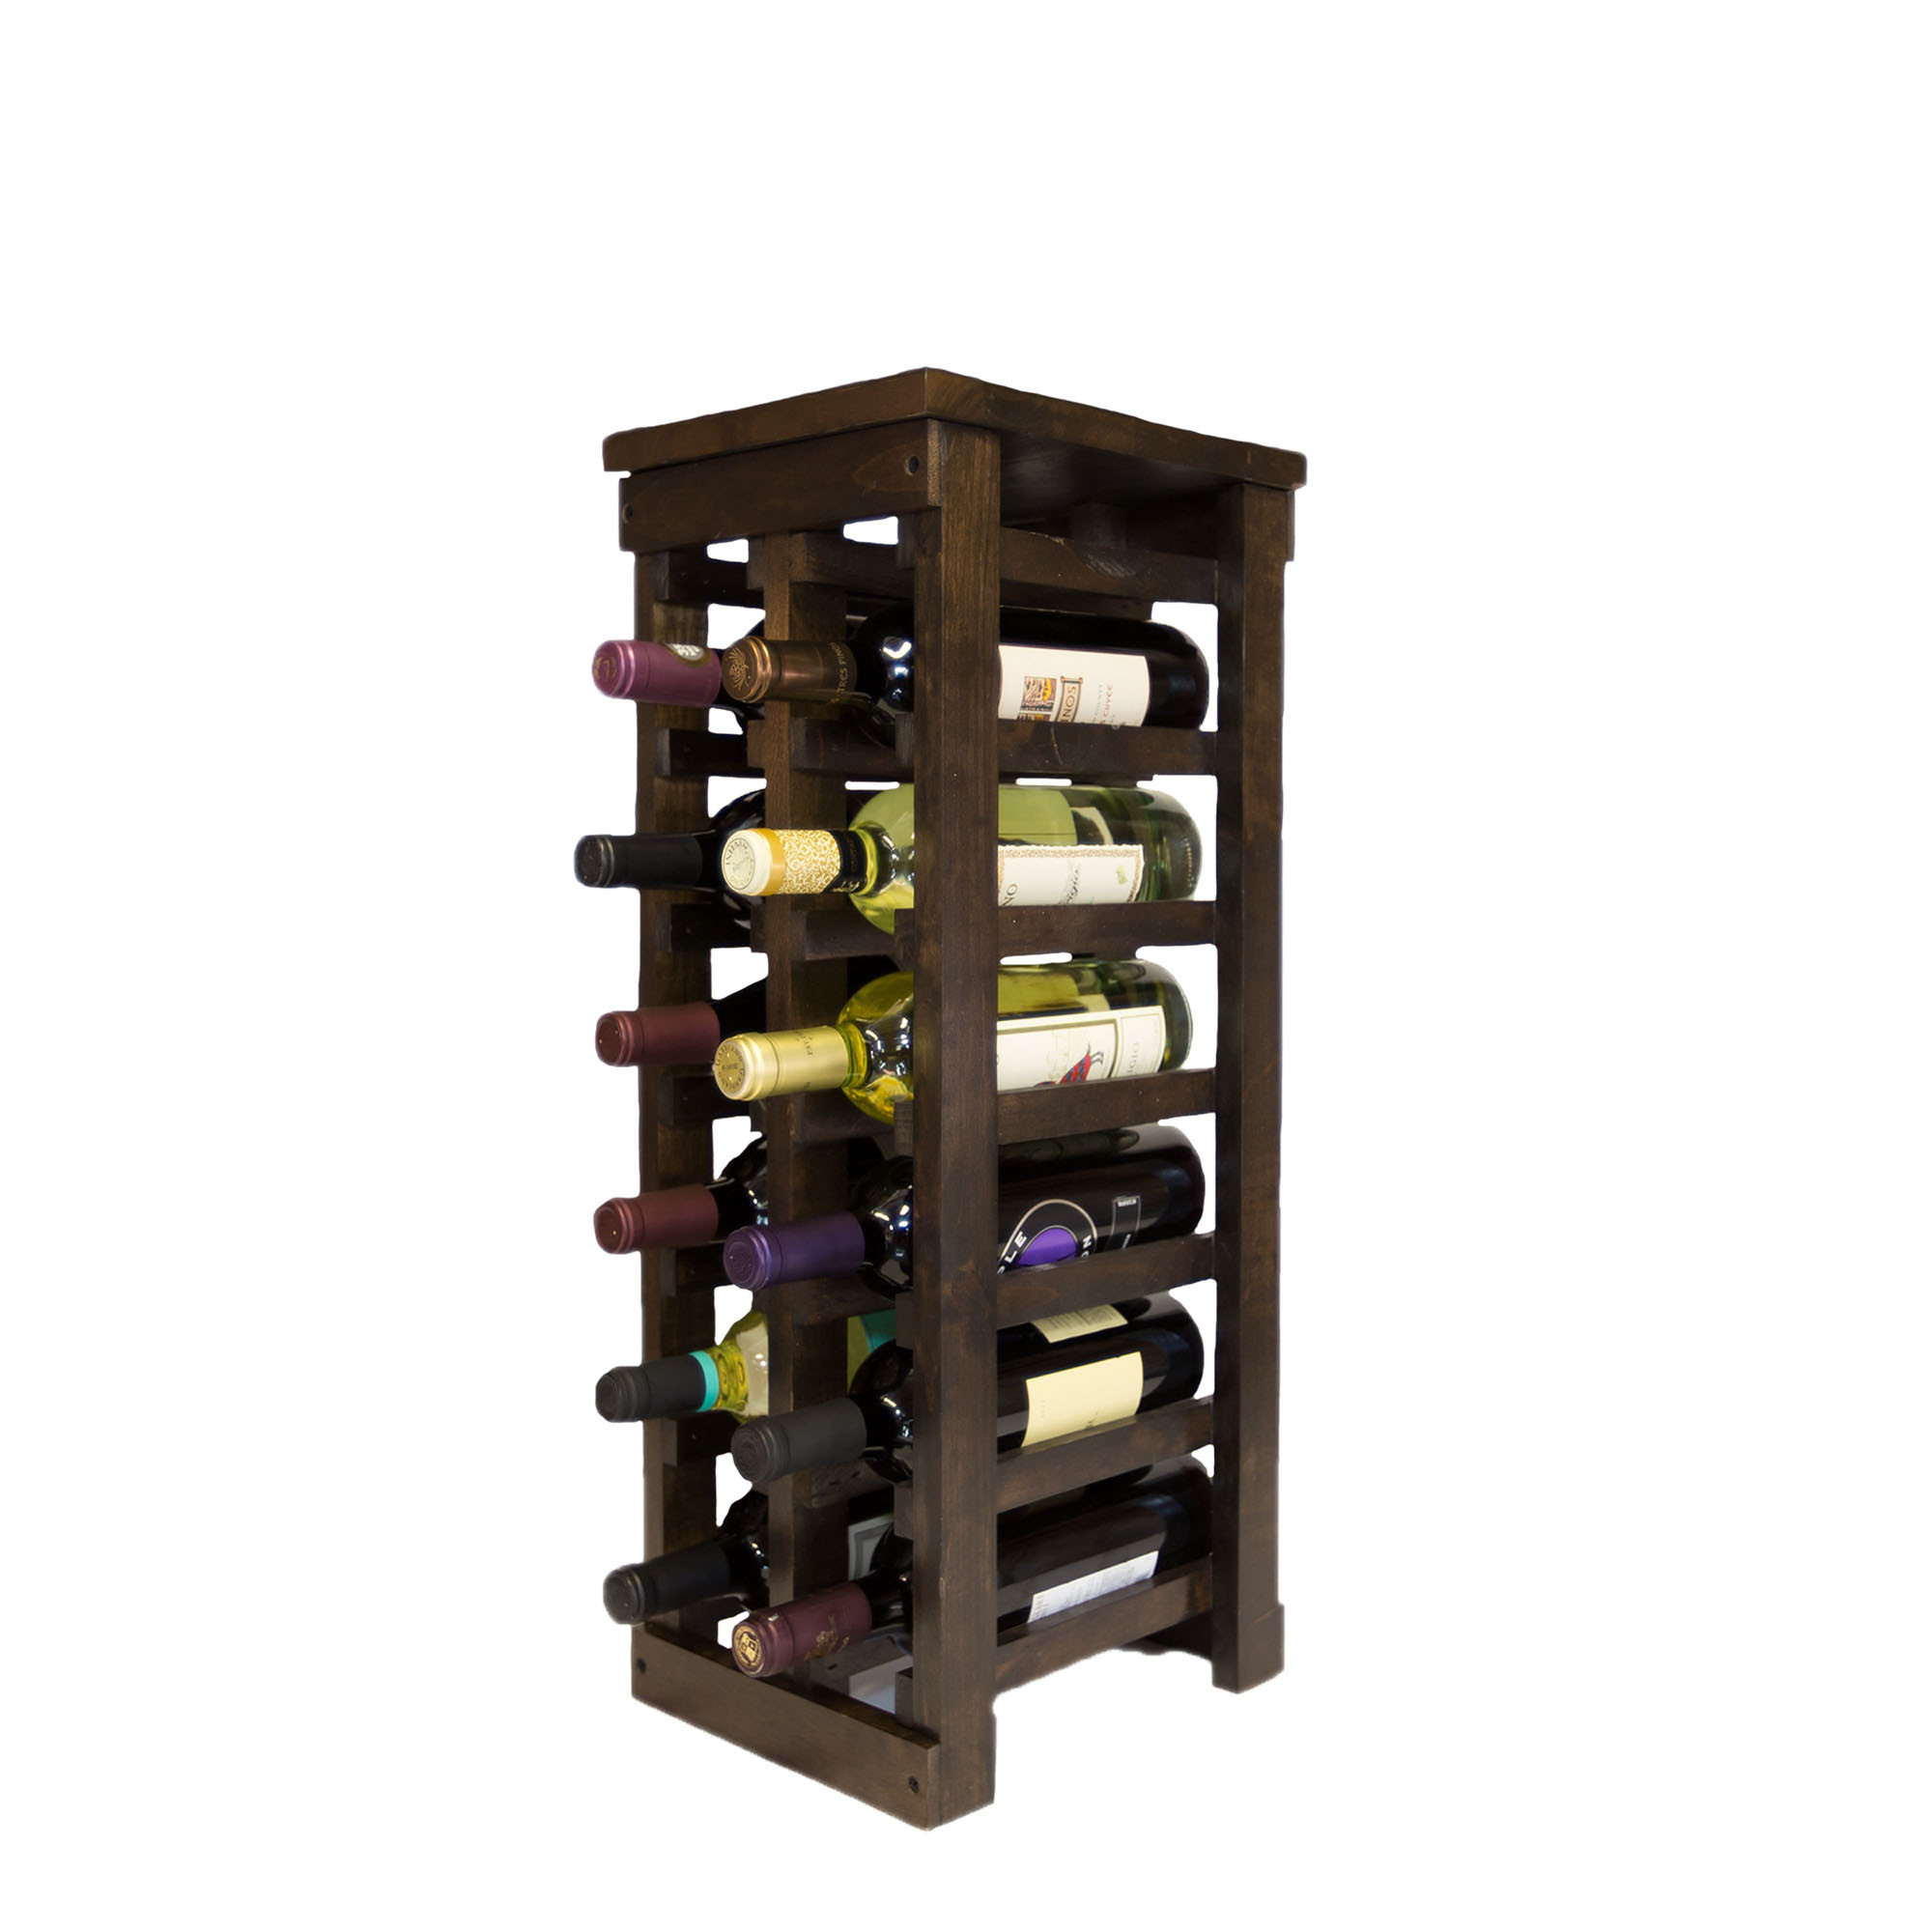 Best ideas about Floor Wine Racks
. Save or Pin 12 Bottle Floor Wine Rack Now.